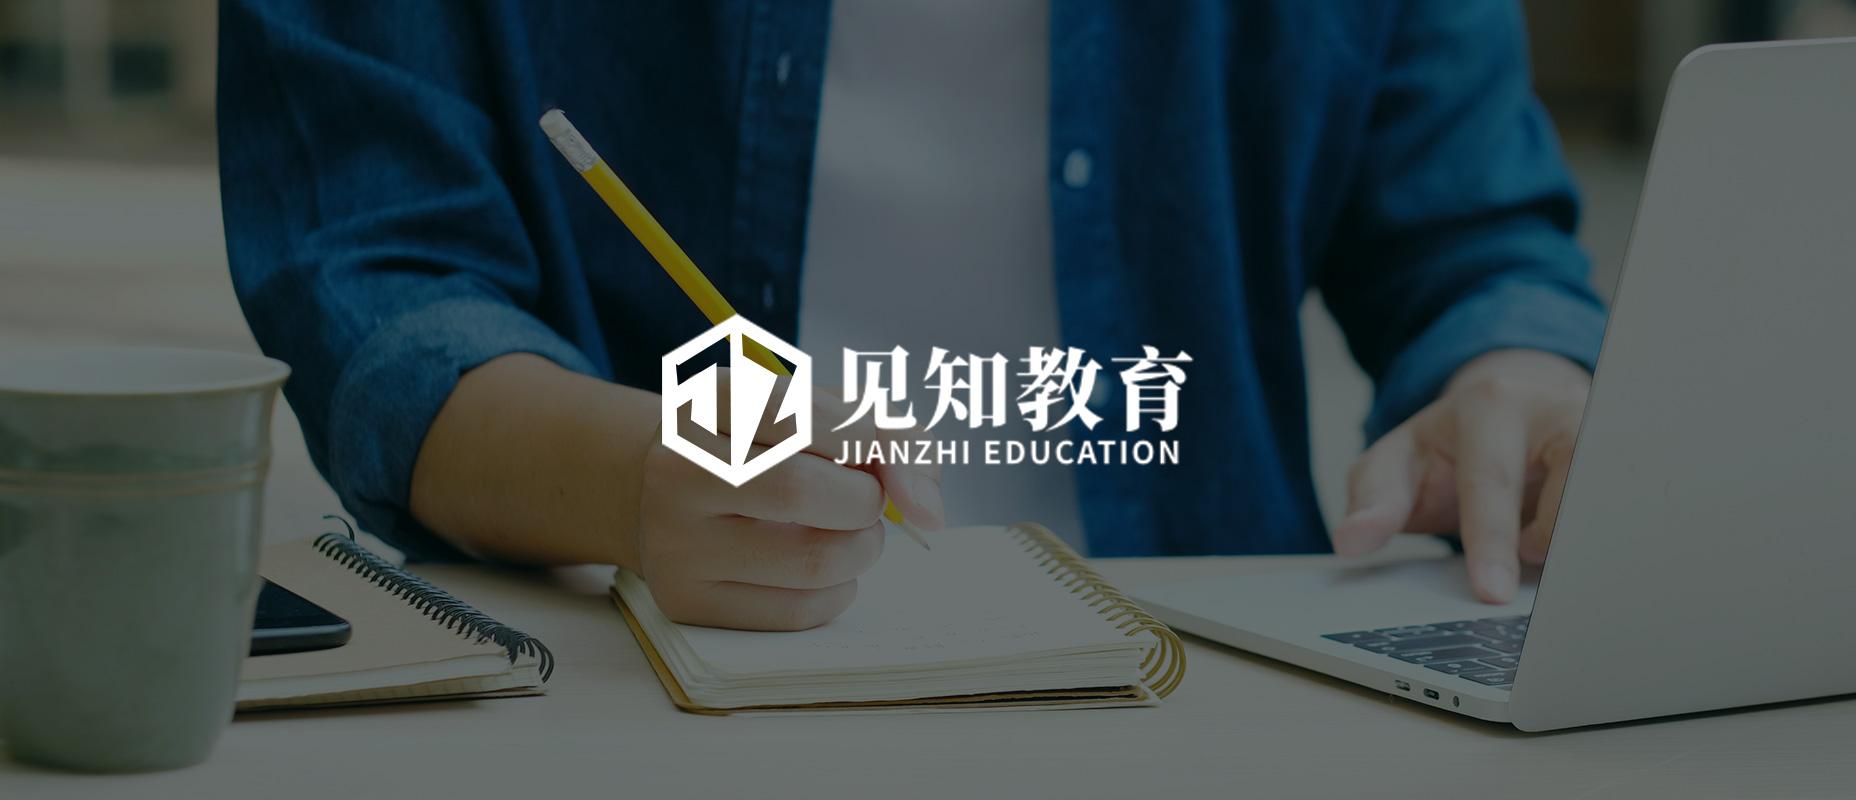 IPO Teknologi Pendidikan Jianzhi: Platform Pendidikan dari China